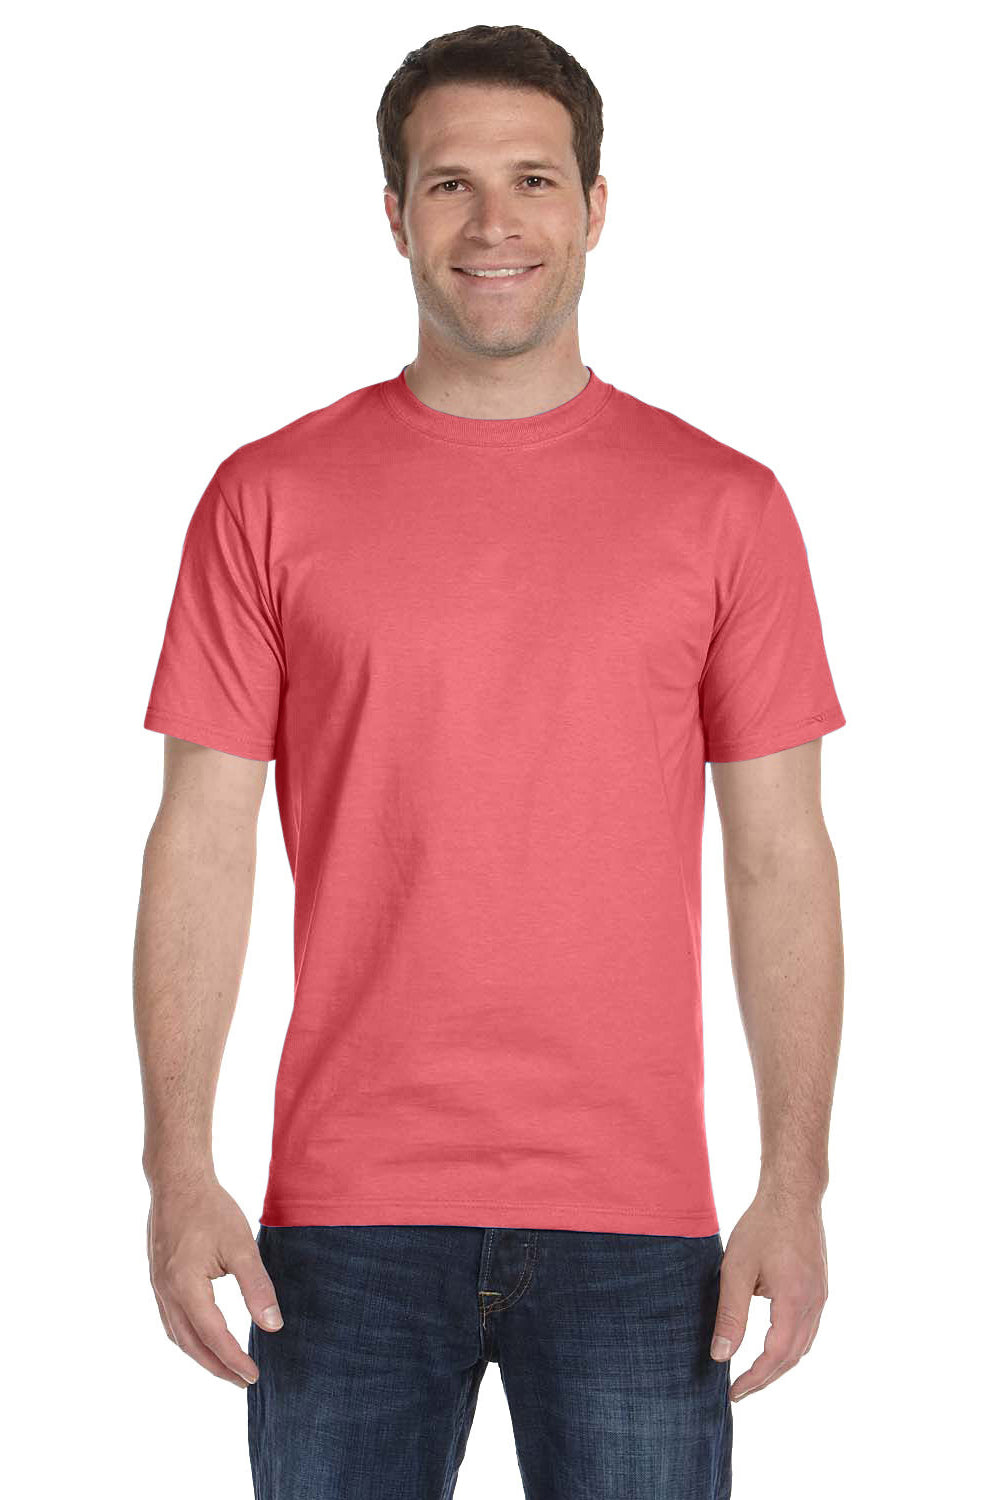 Hanes 5280 Mens ComfortSoft Short Sleeve Crewneck T-Shirt Charisma Coral Front